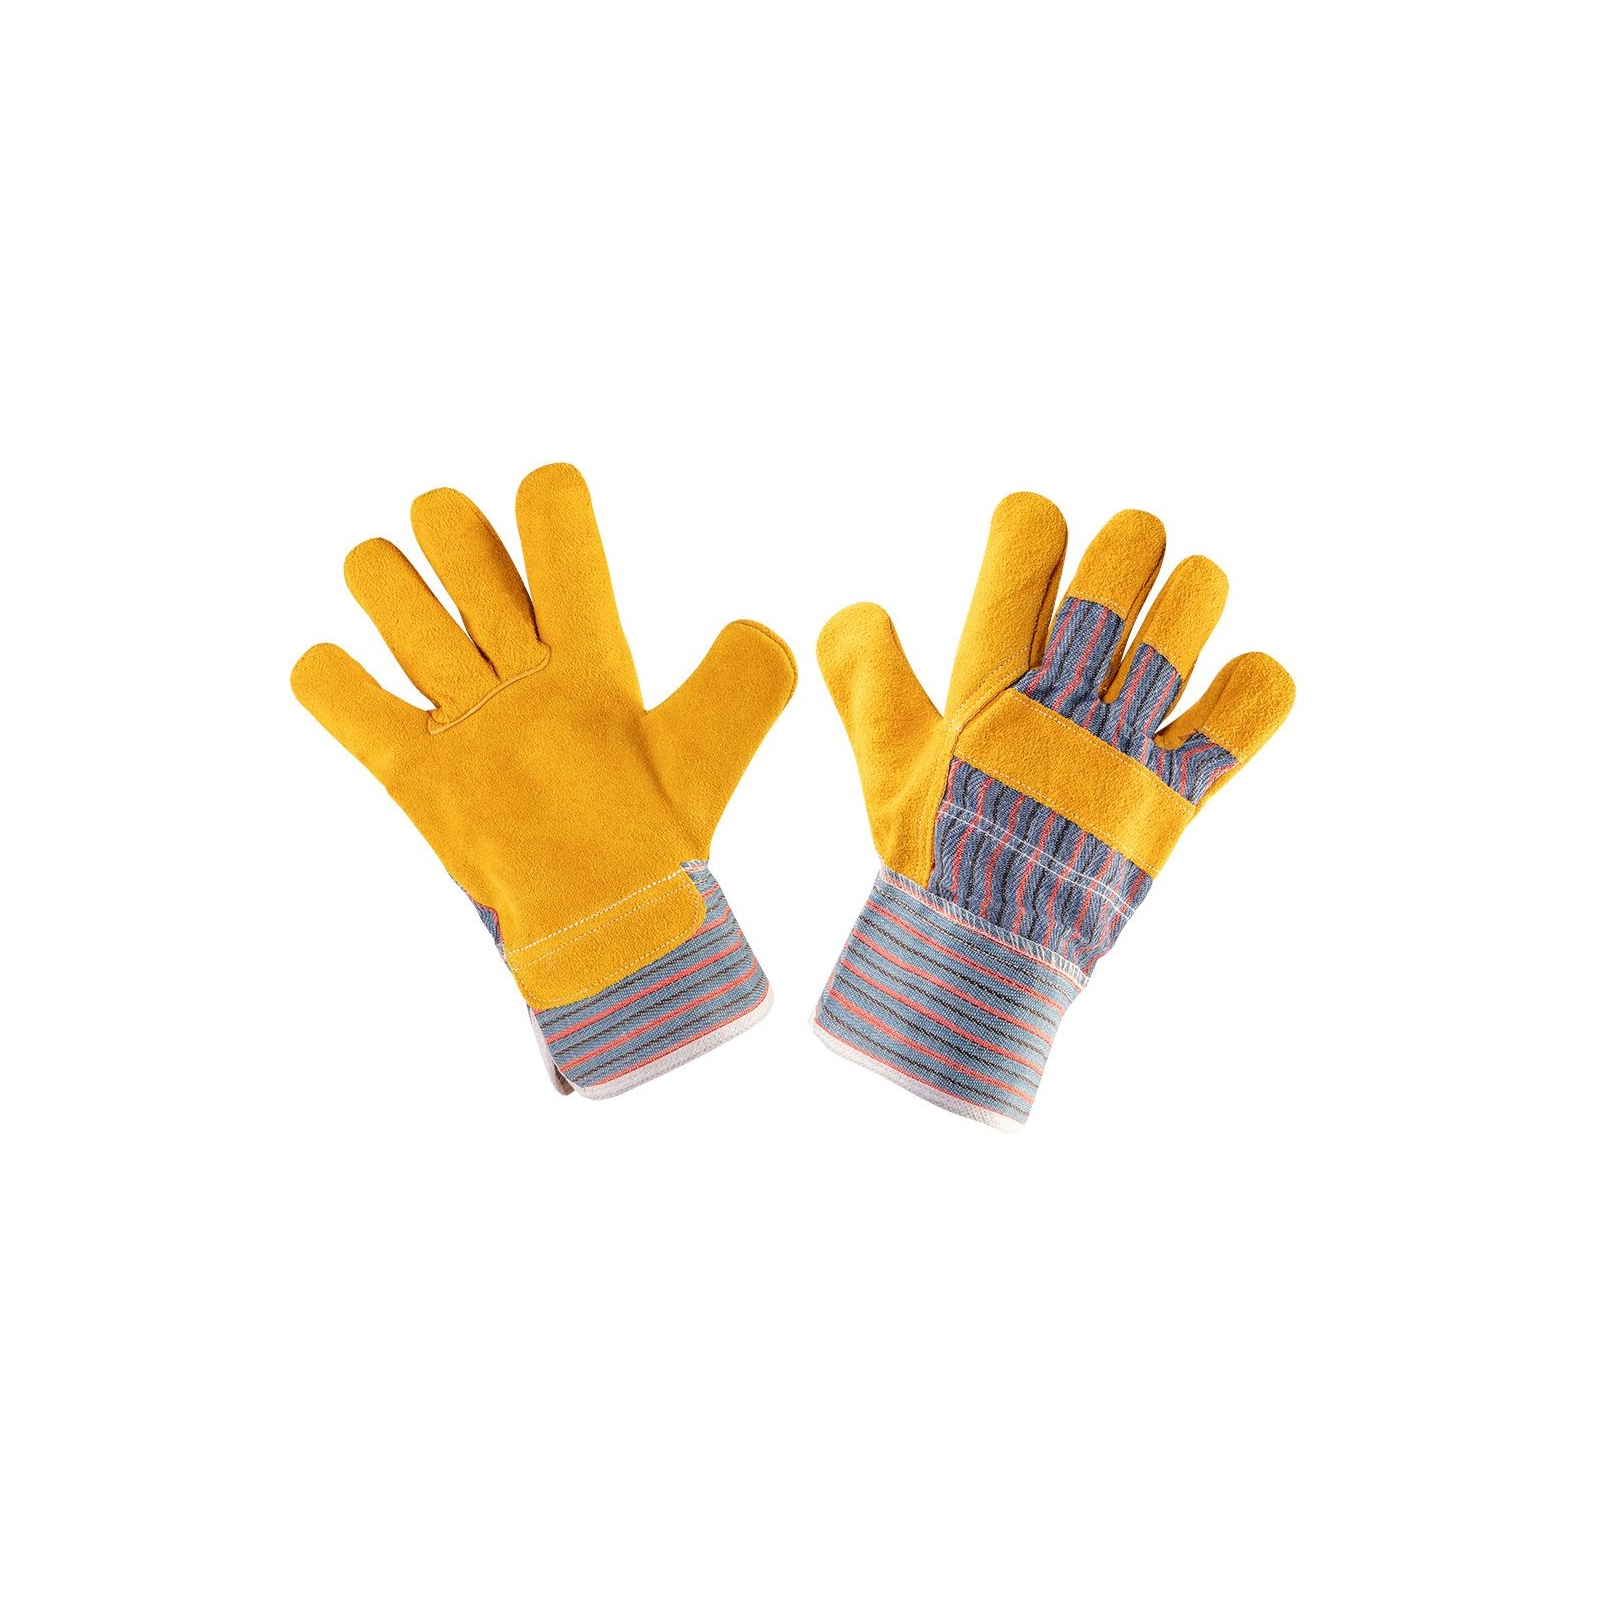 Защитные перчатки Neo Tools коровий спил, р.10.5, желтый (97-650)